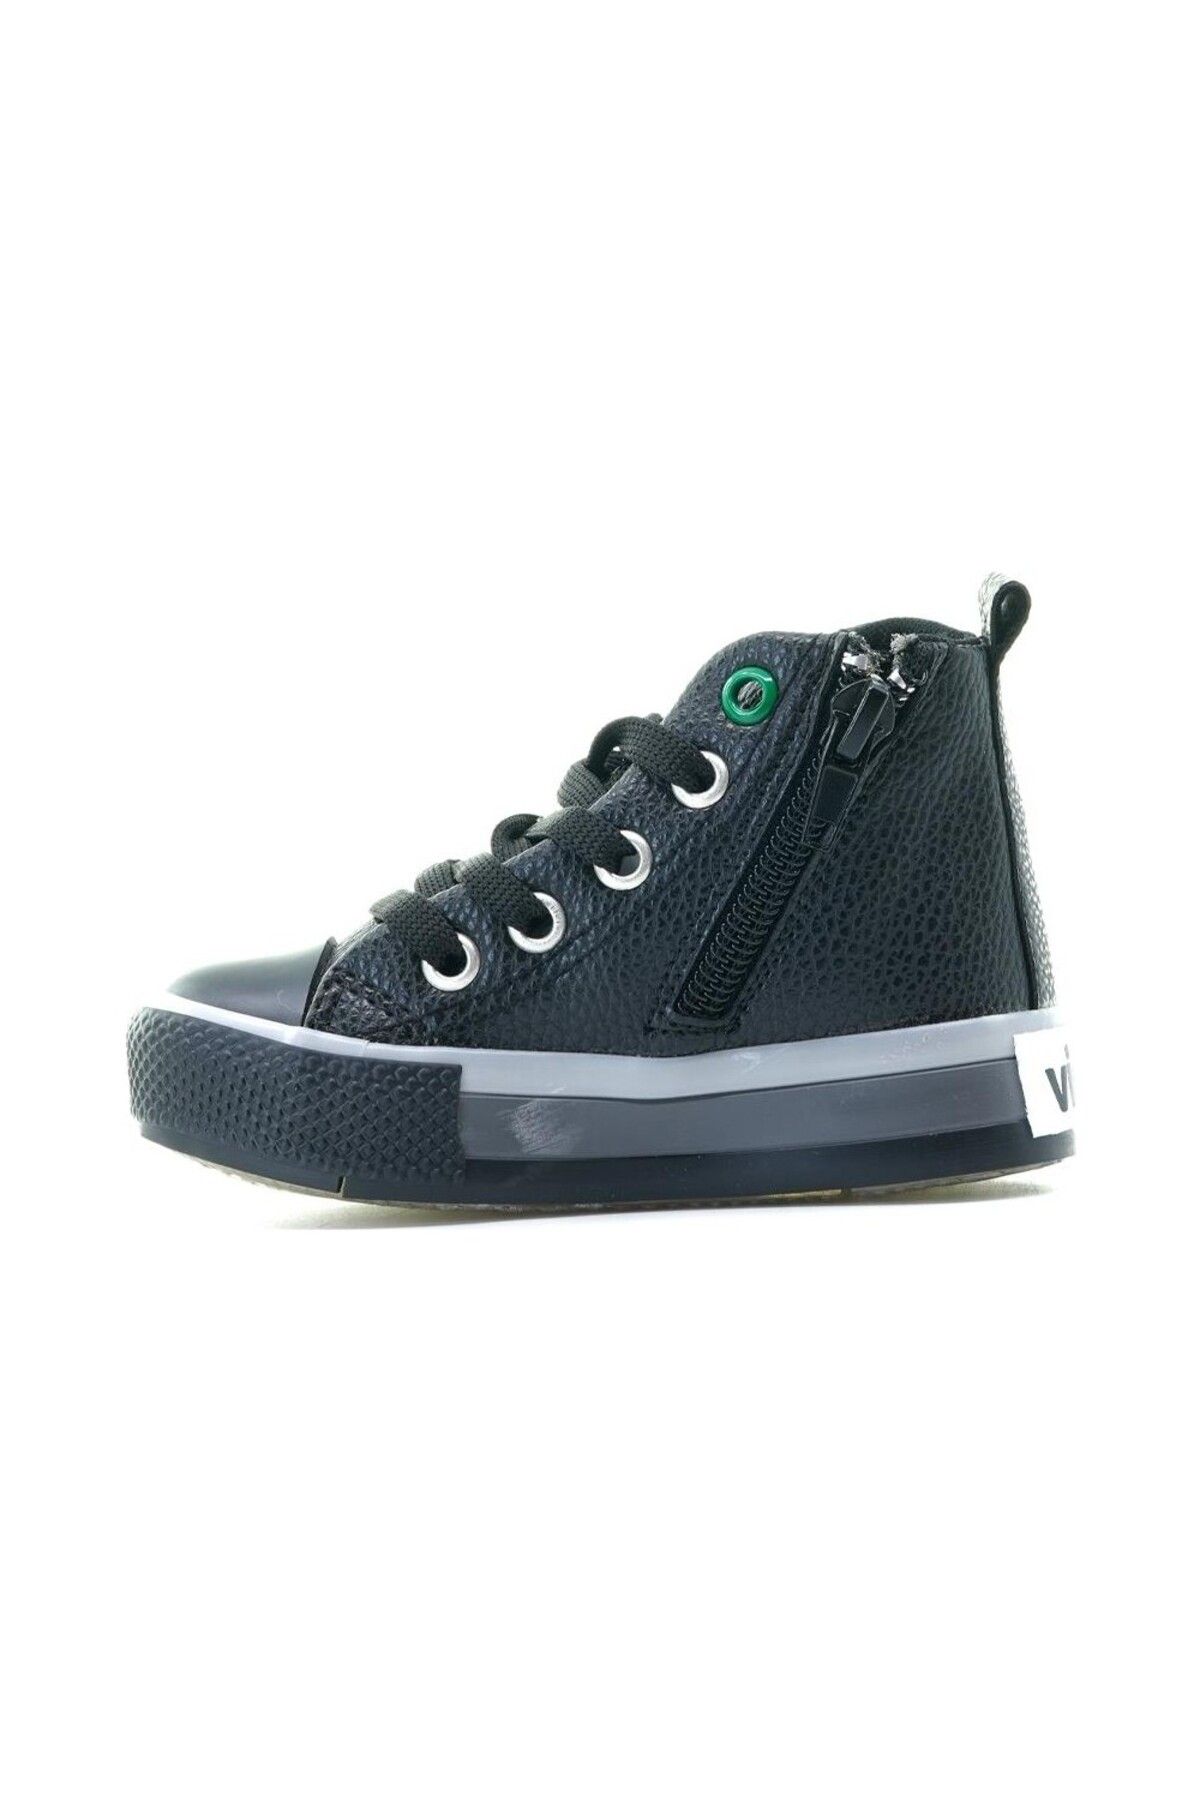 Vicco 925,f22k,210 Roro Çocuk Boyunlu Günlük Spor Ayakkabı Siyah Siyah Siyah SİYAH